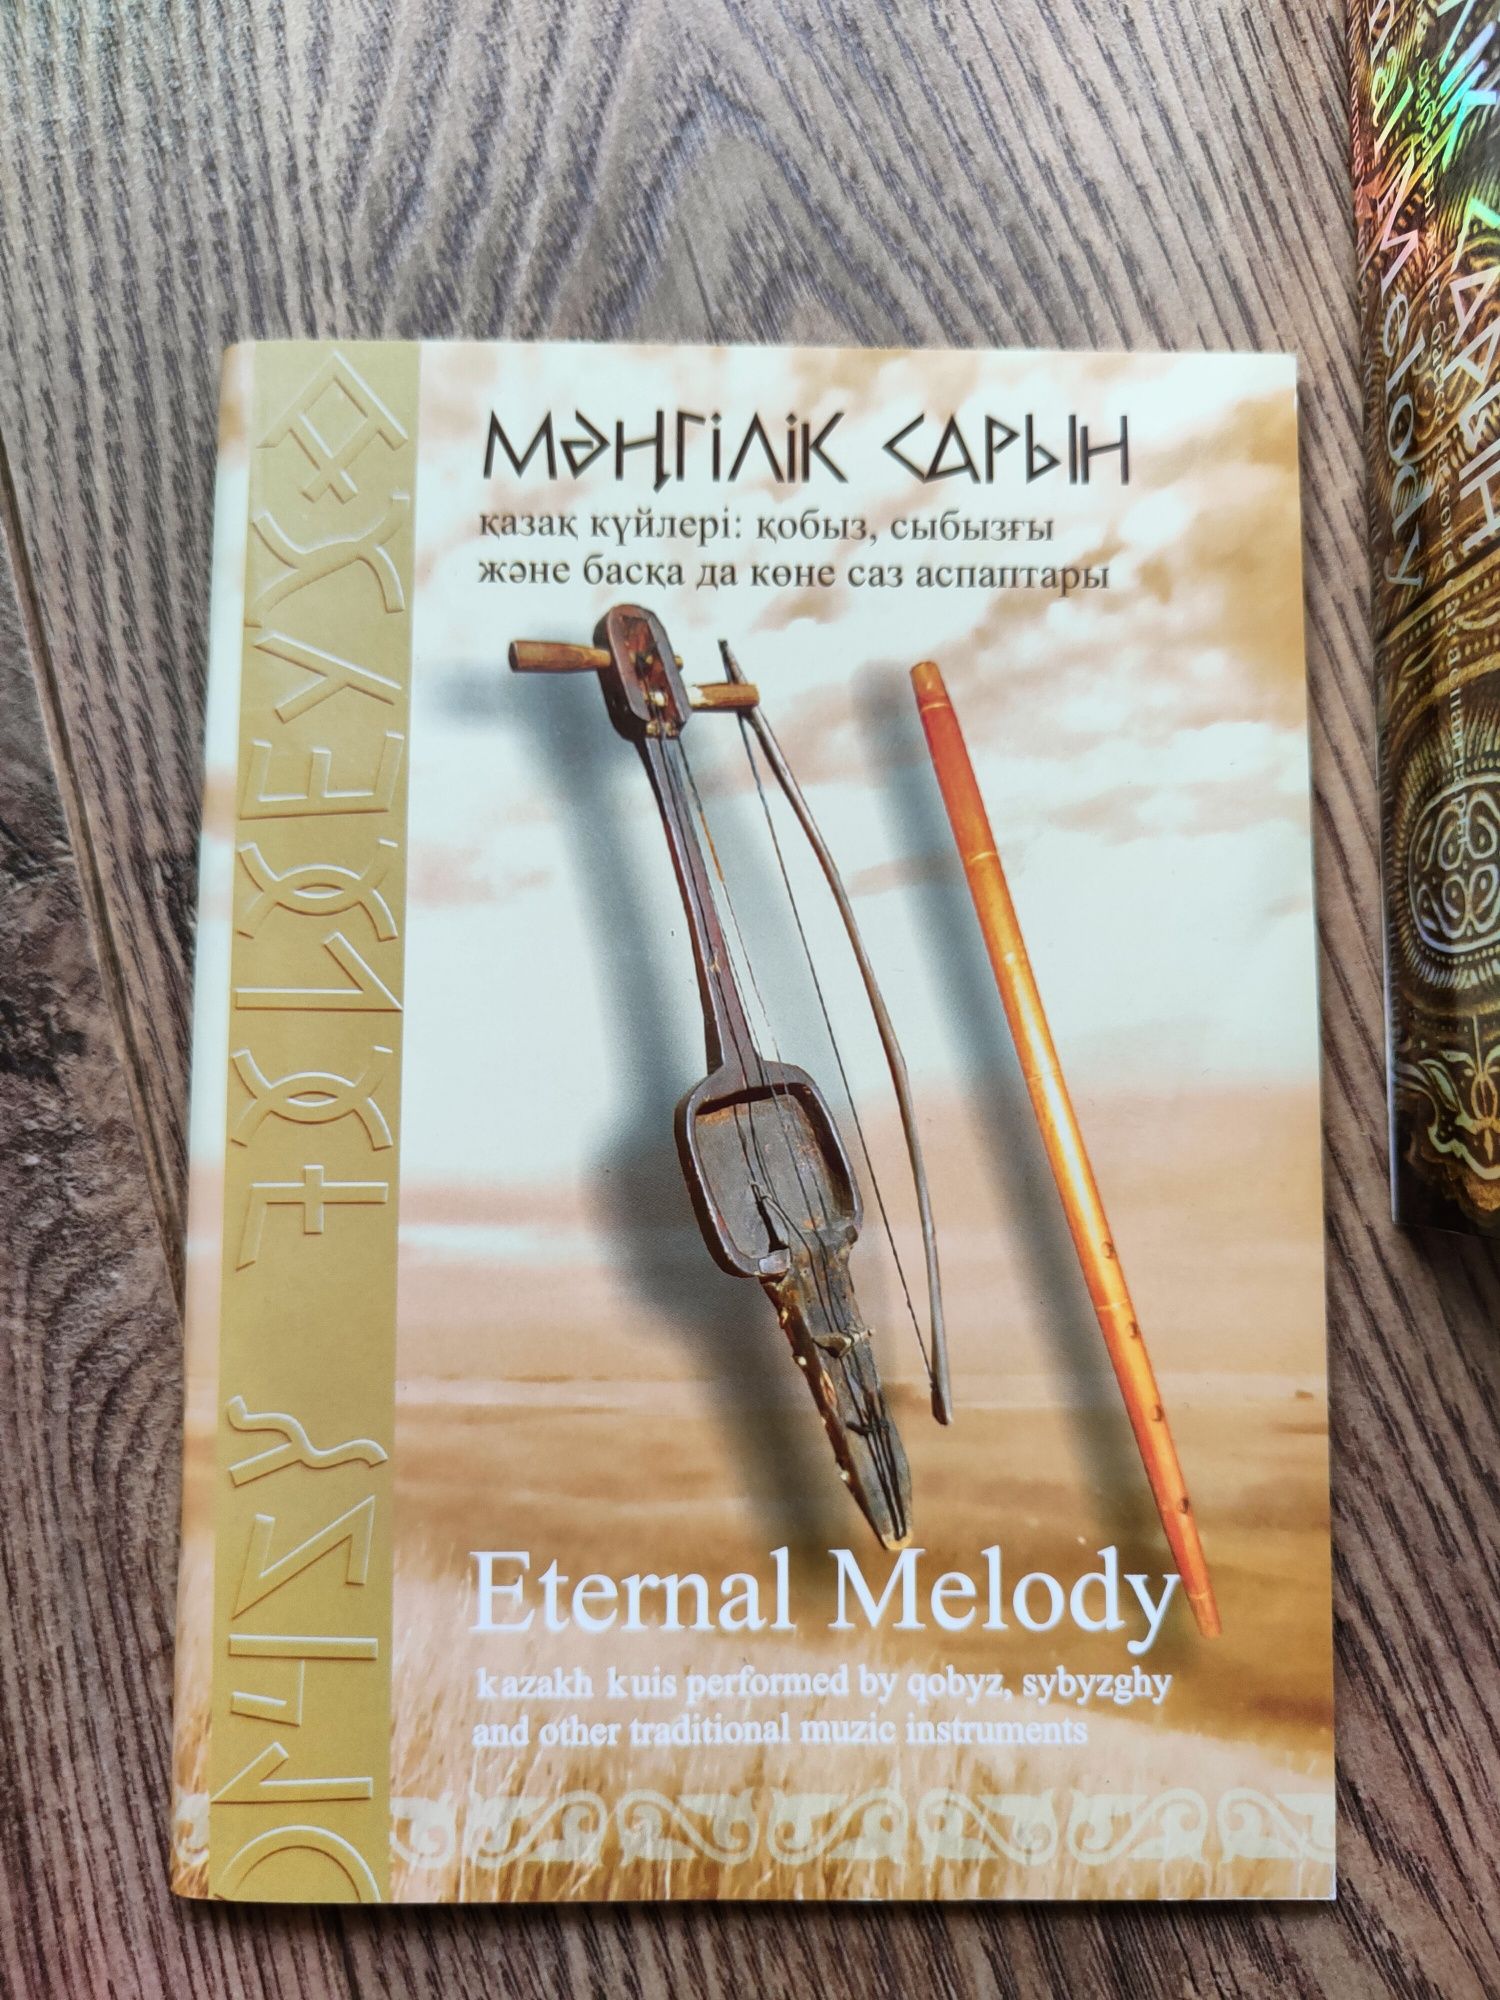 Eternal Melody kazakh Muzyka etniczna z Kazachstanu